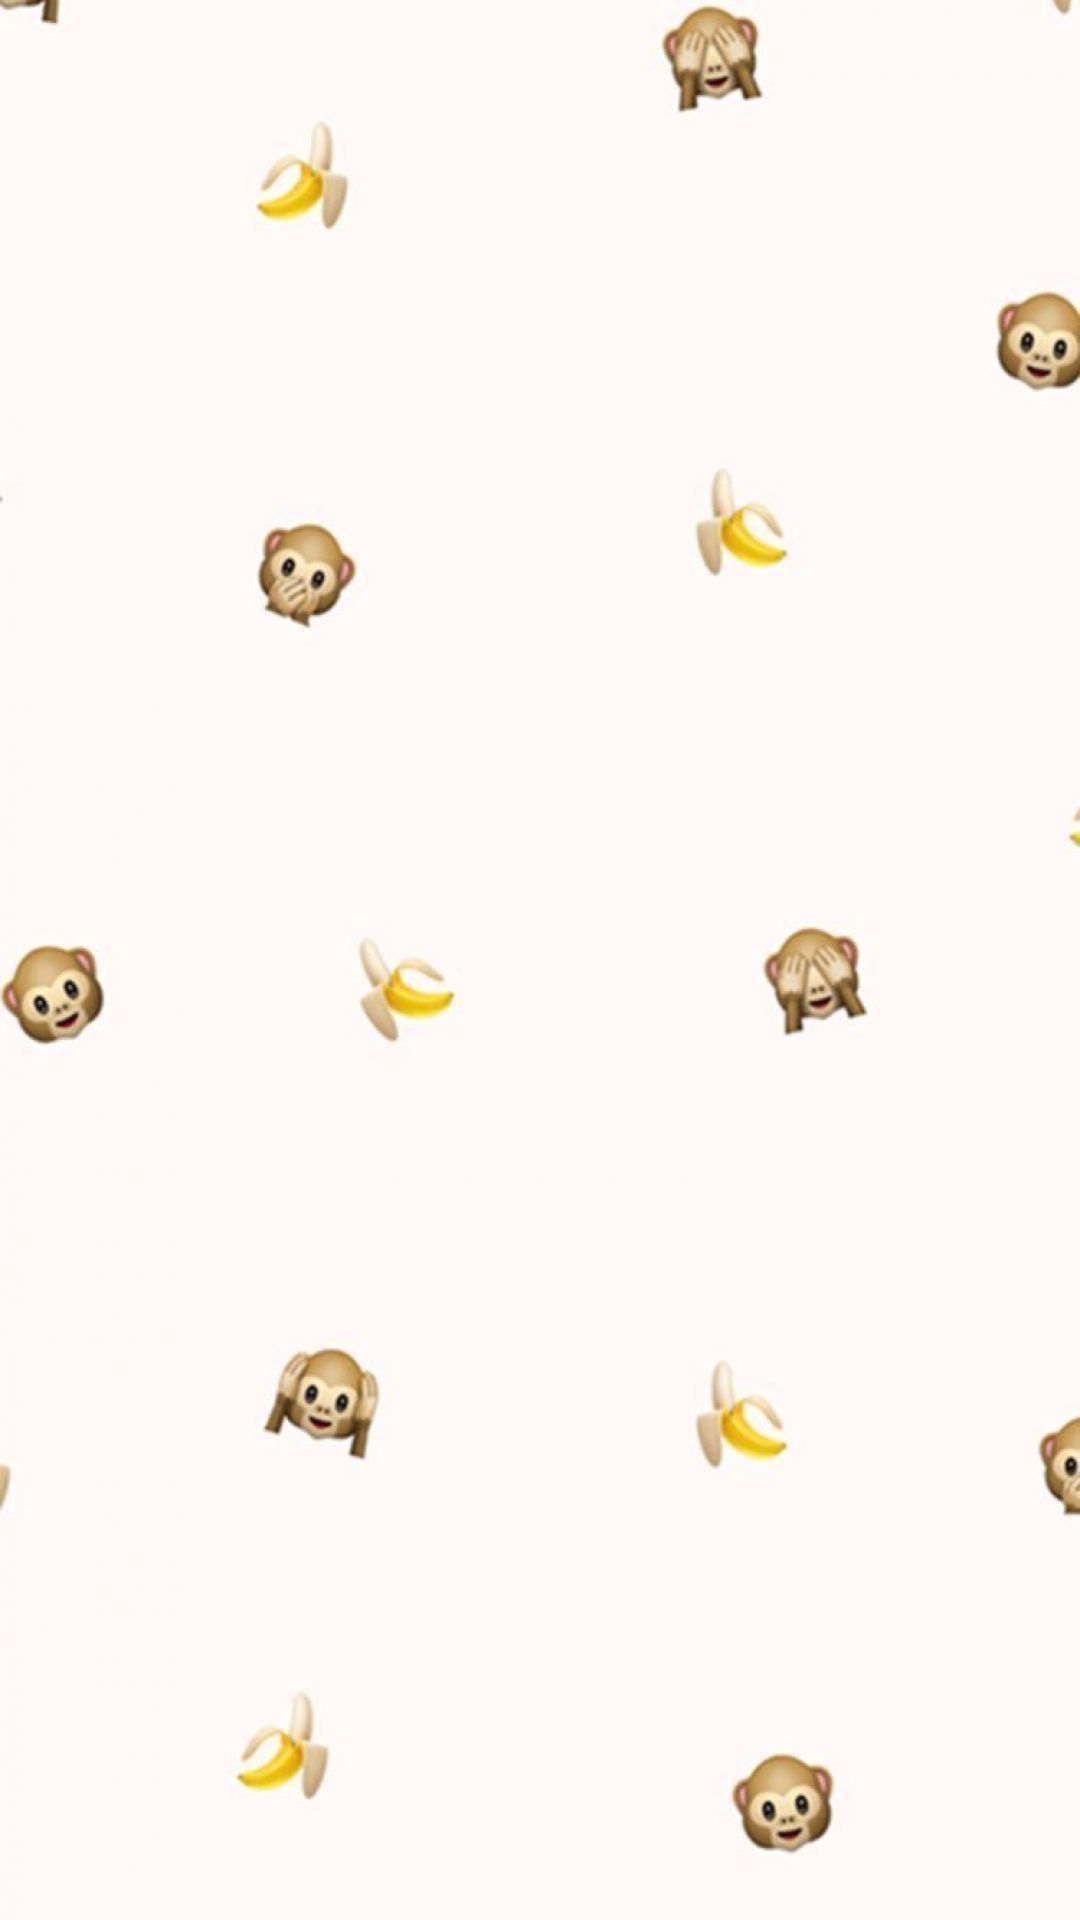 Wallpapers Iphone Emoji Backgrounds